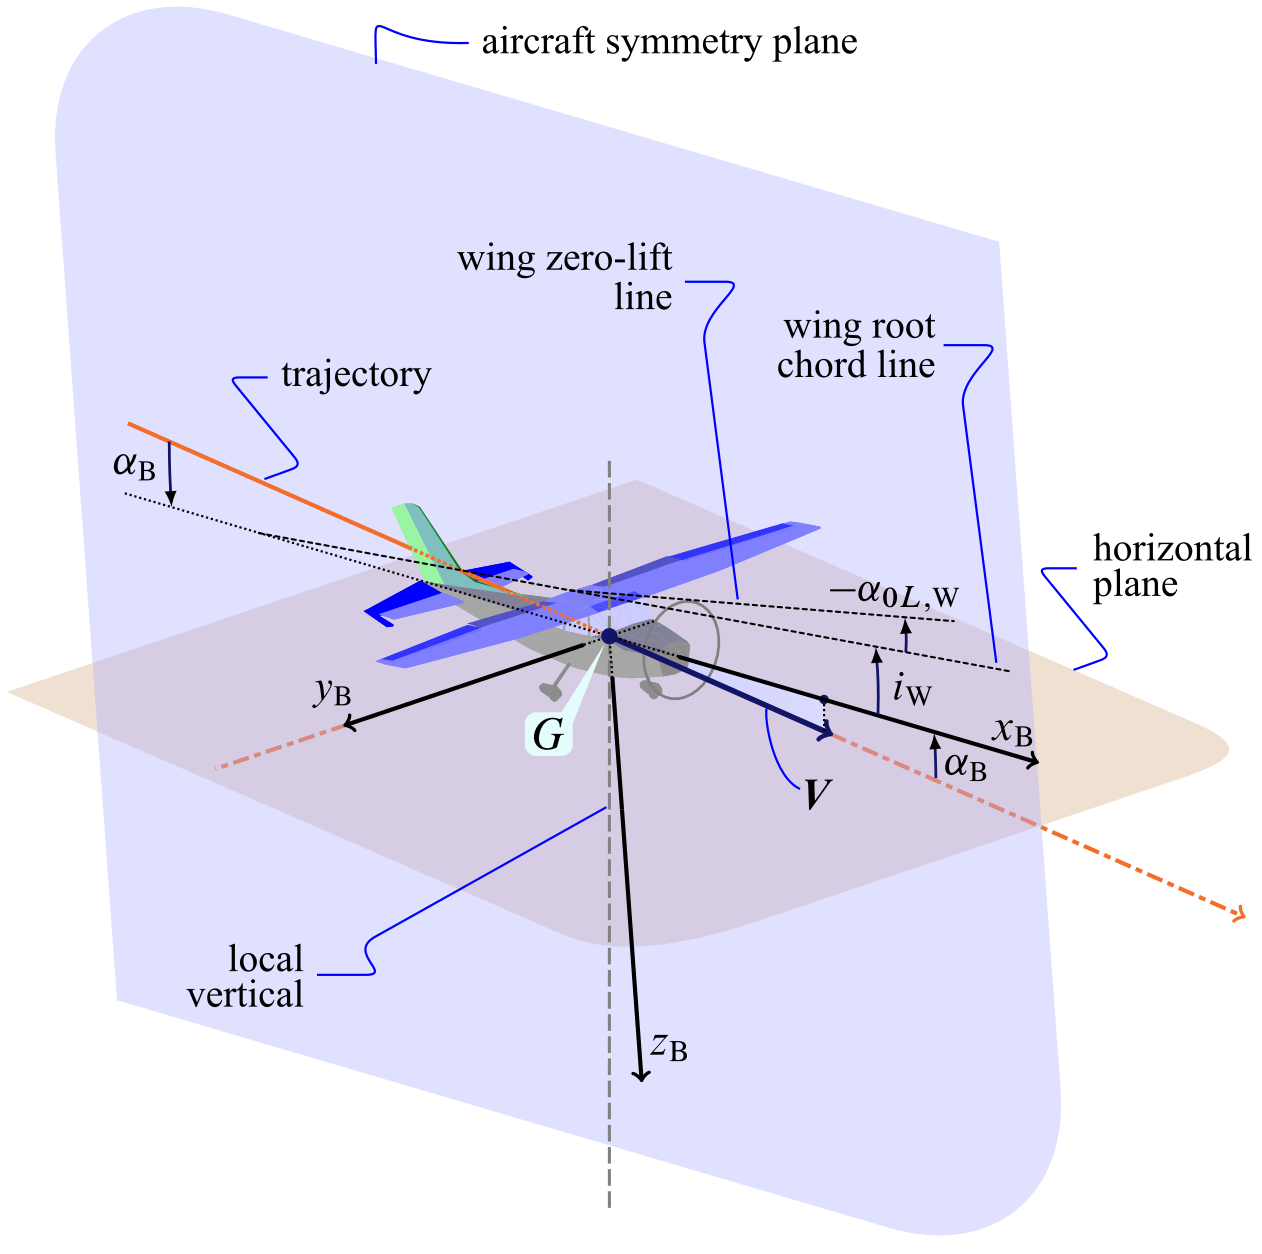 Wings level flight along a horizontal trajectory.